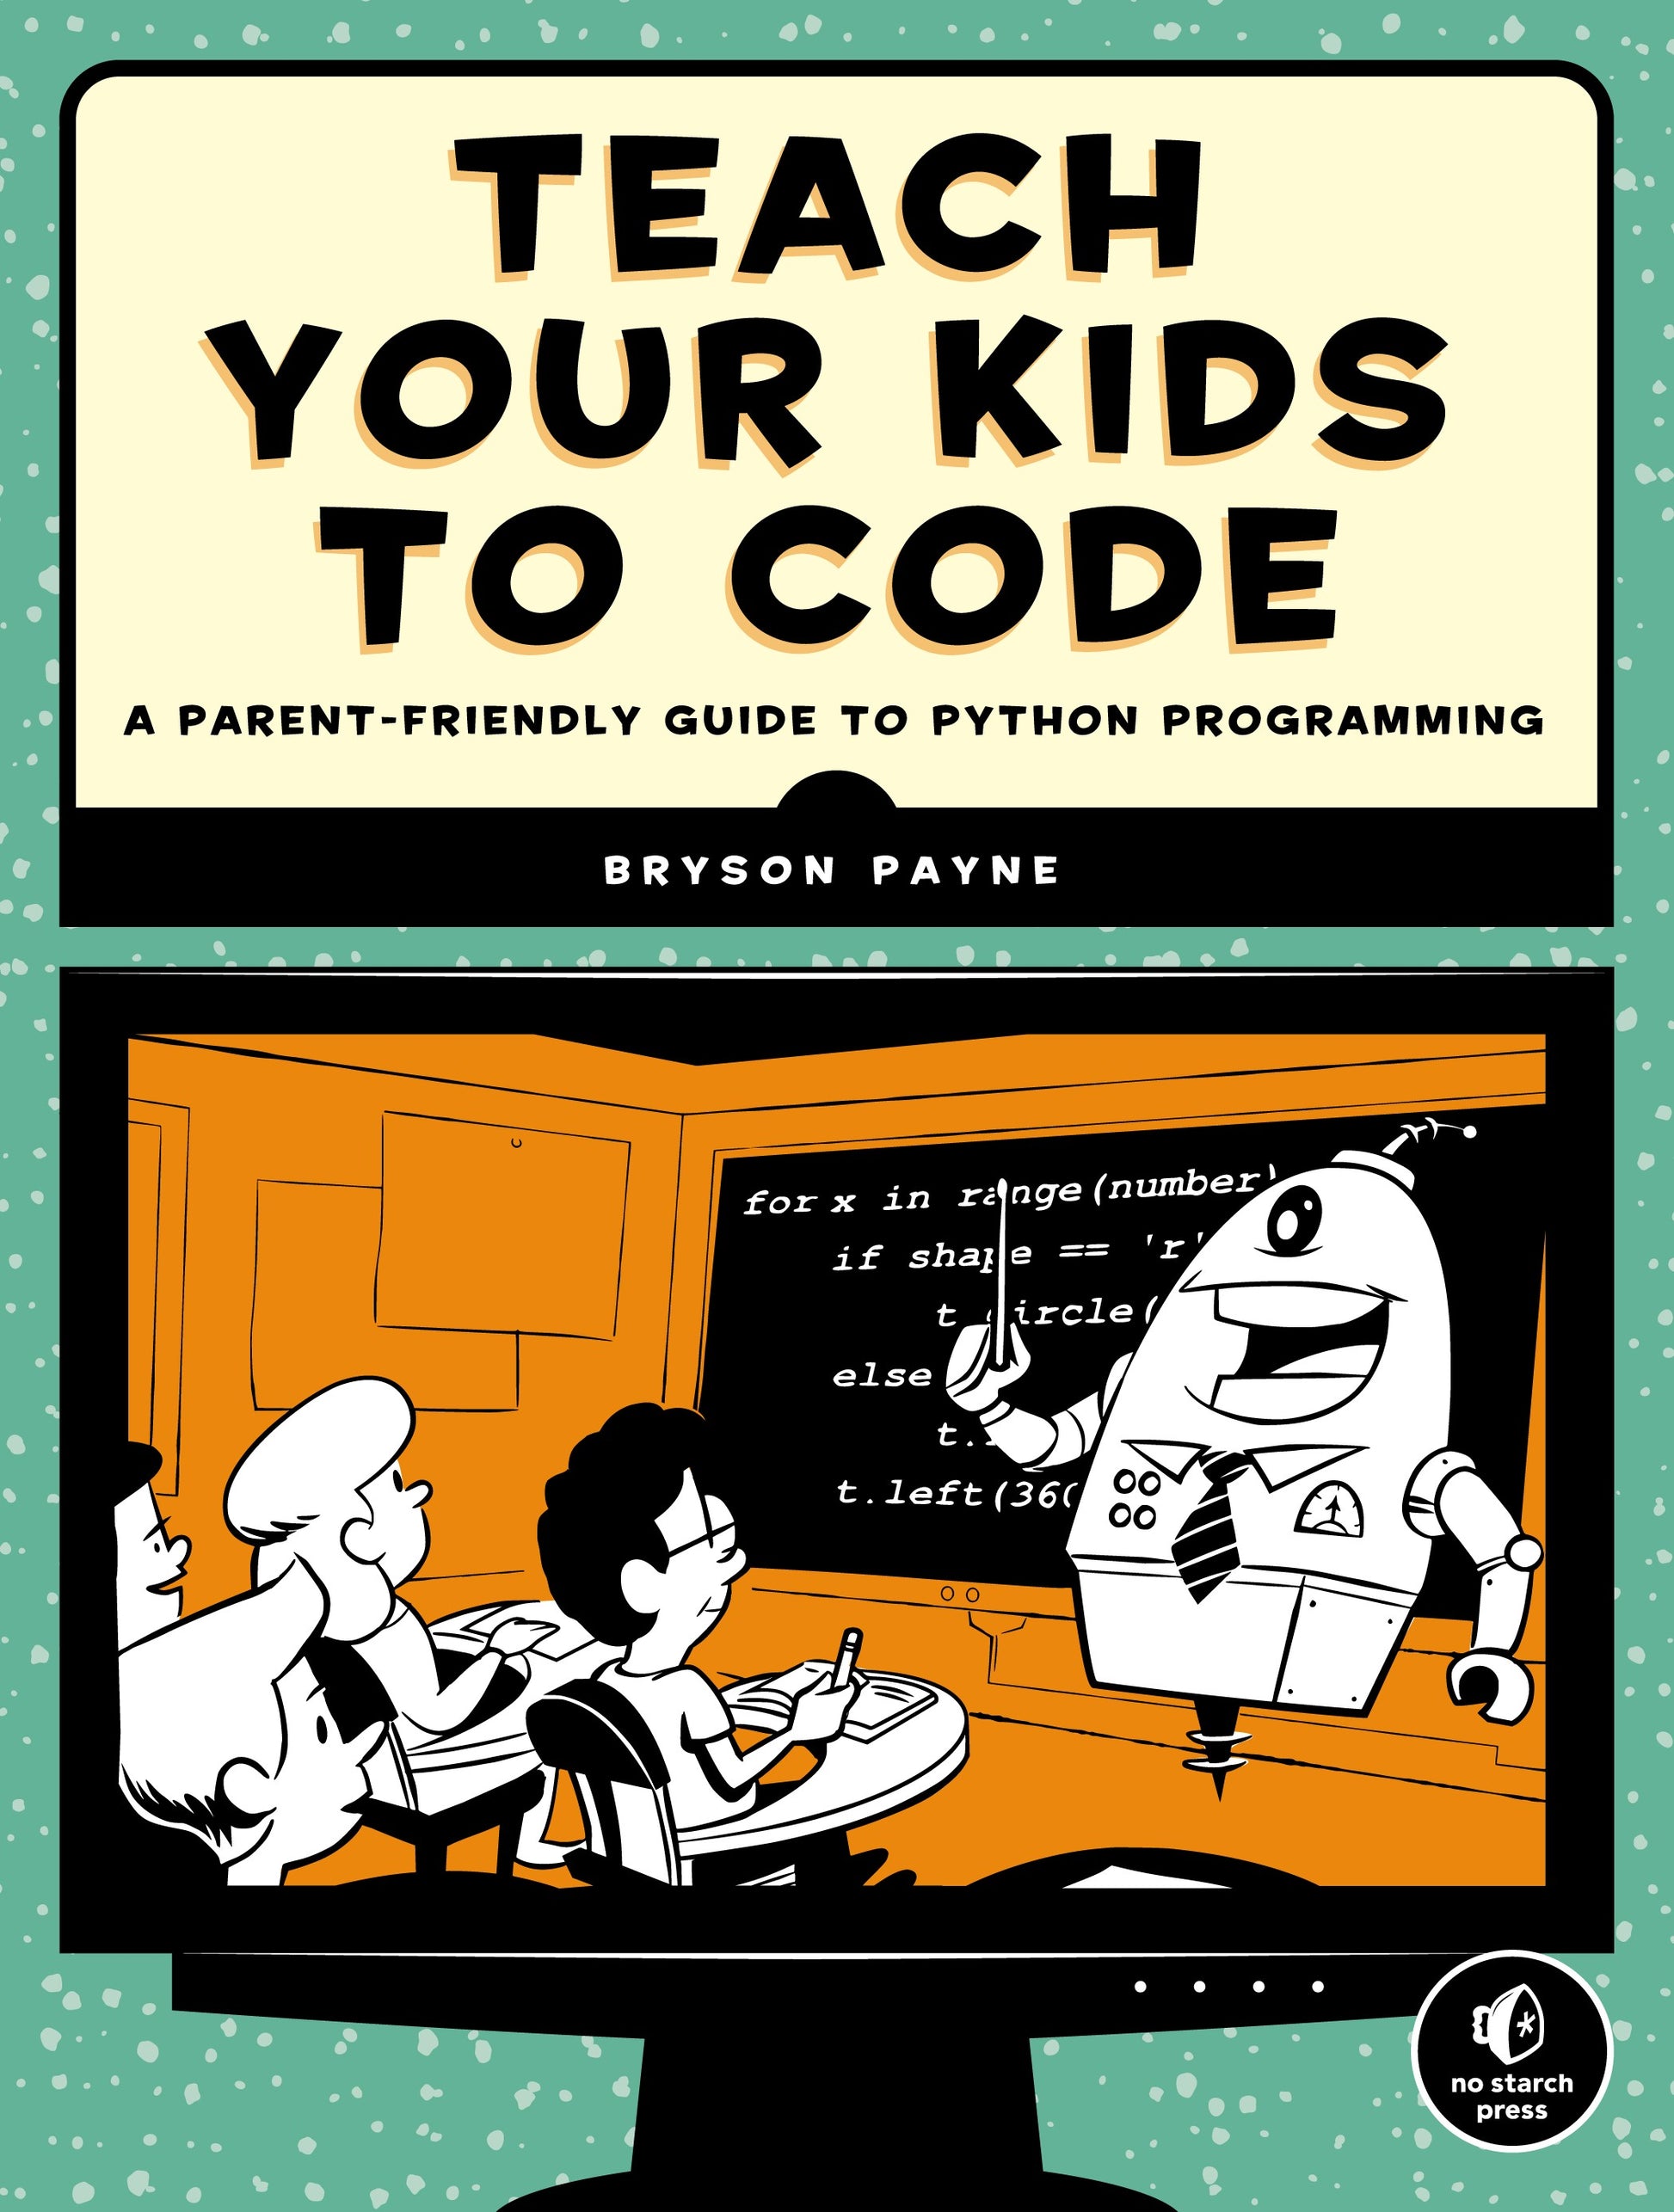 Python, programming for kids, educational coding, STEM education, tech skills for kids, Digital Technology Book, Digital Technology Resource, Computer Science Book, Electronics Book